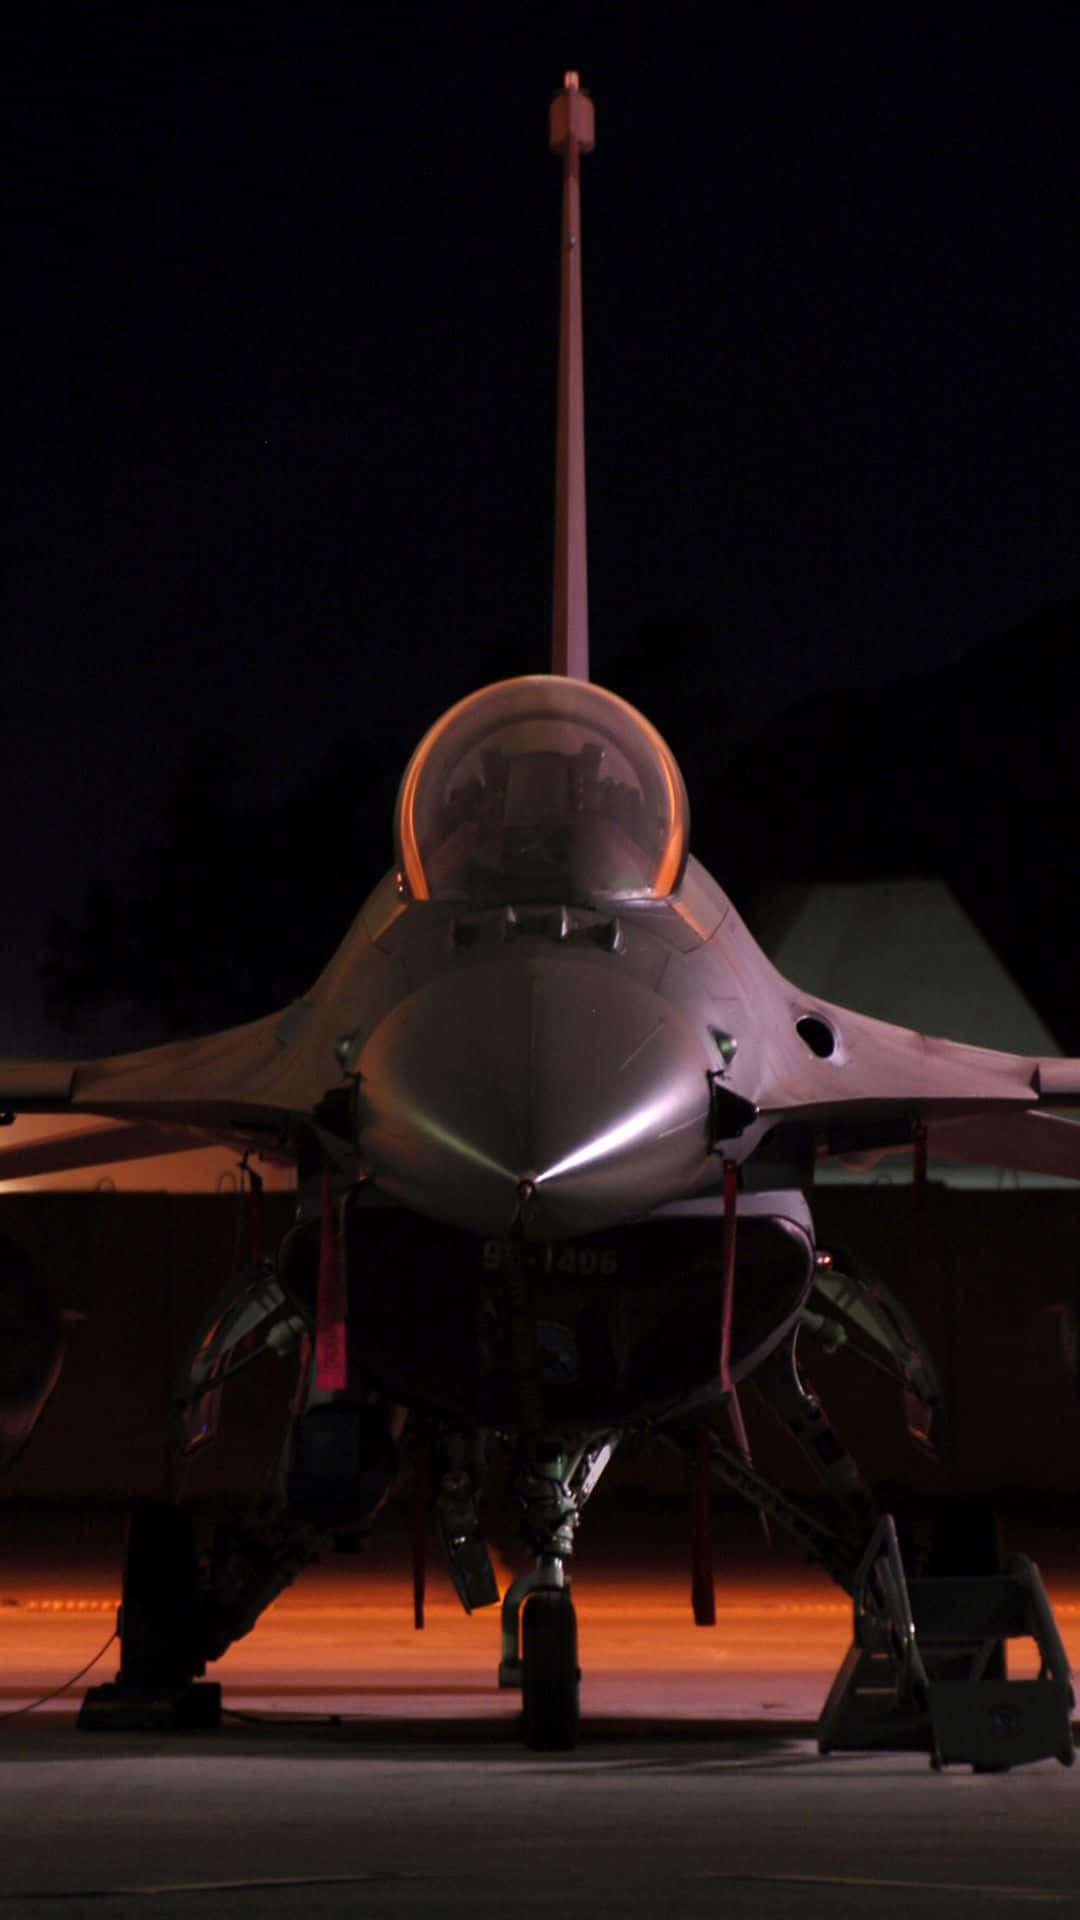 Fondode Pantalla De General Dynamics F16 Fighting Falcon, El Avión De Combate Android Jumbo Jet.